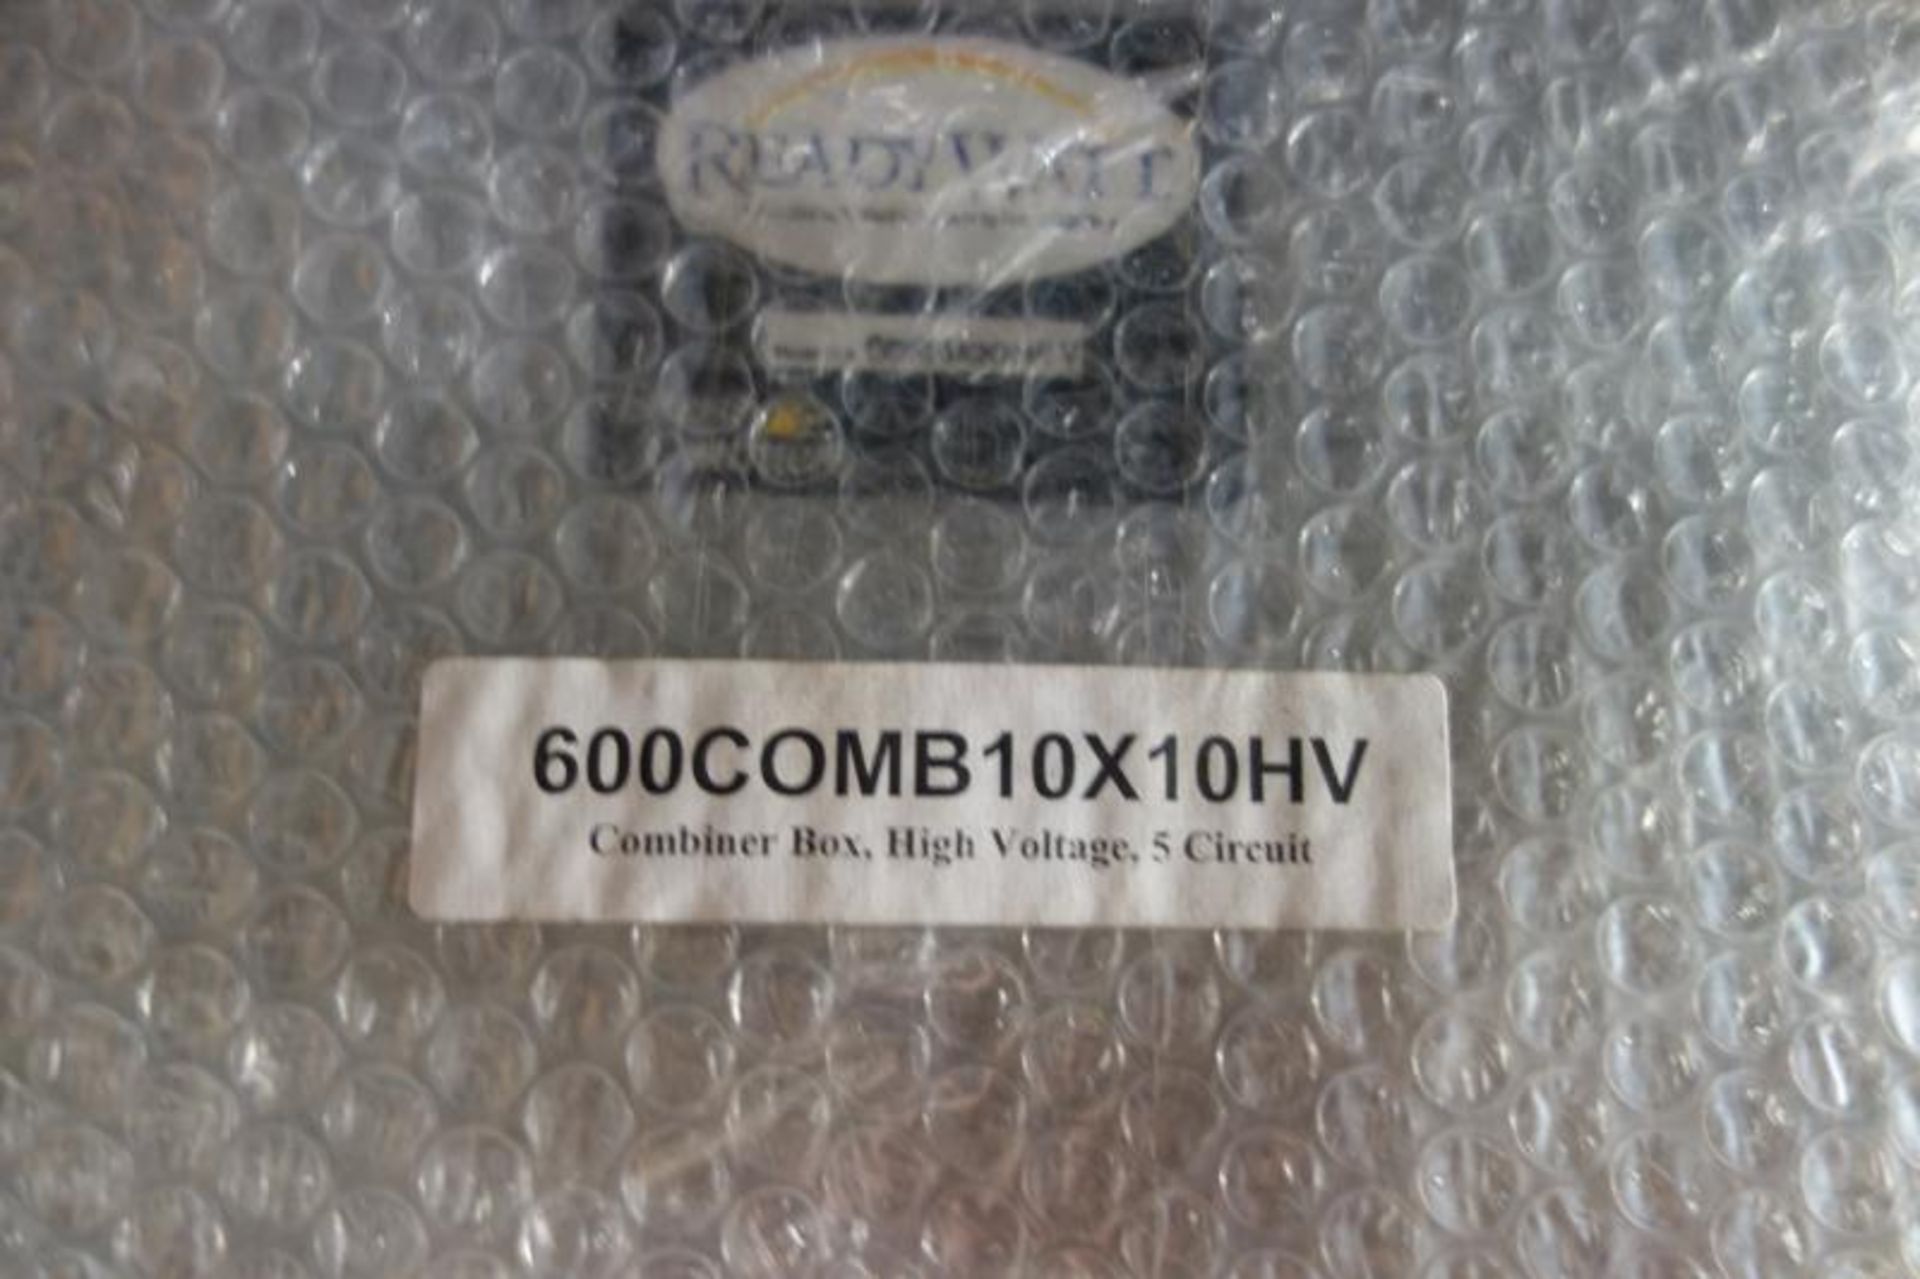 Ready Watt Combiner Boxes, (5) 600 COMB 12x12LV, (1) 600 Combo 10x10HV - Image 2 of 5